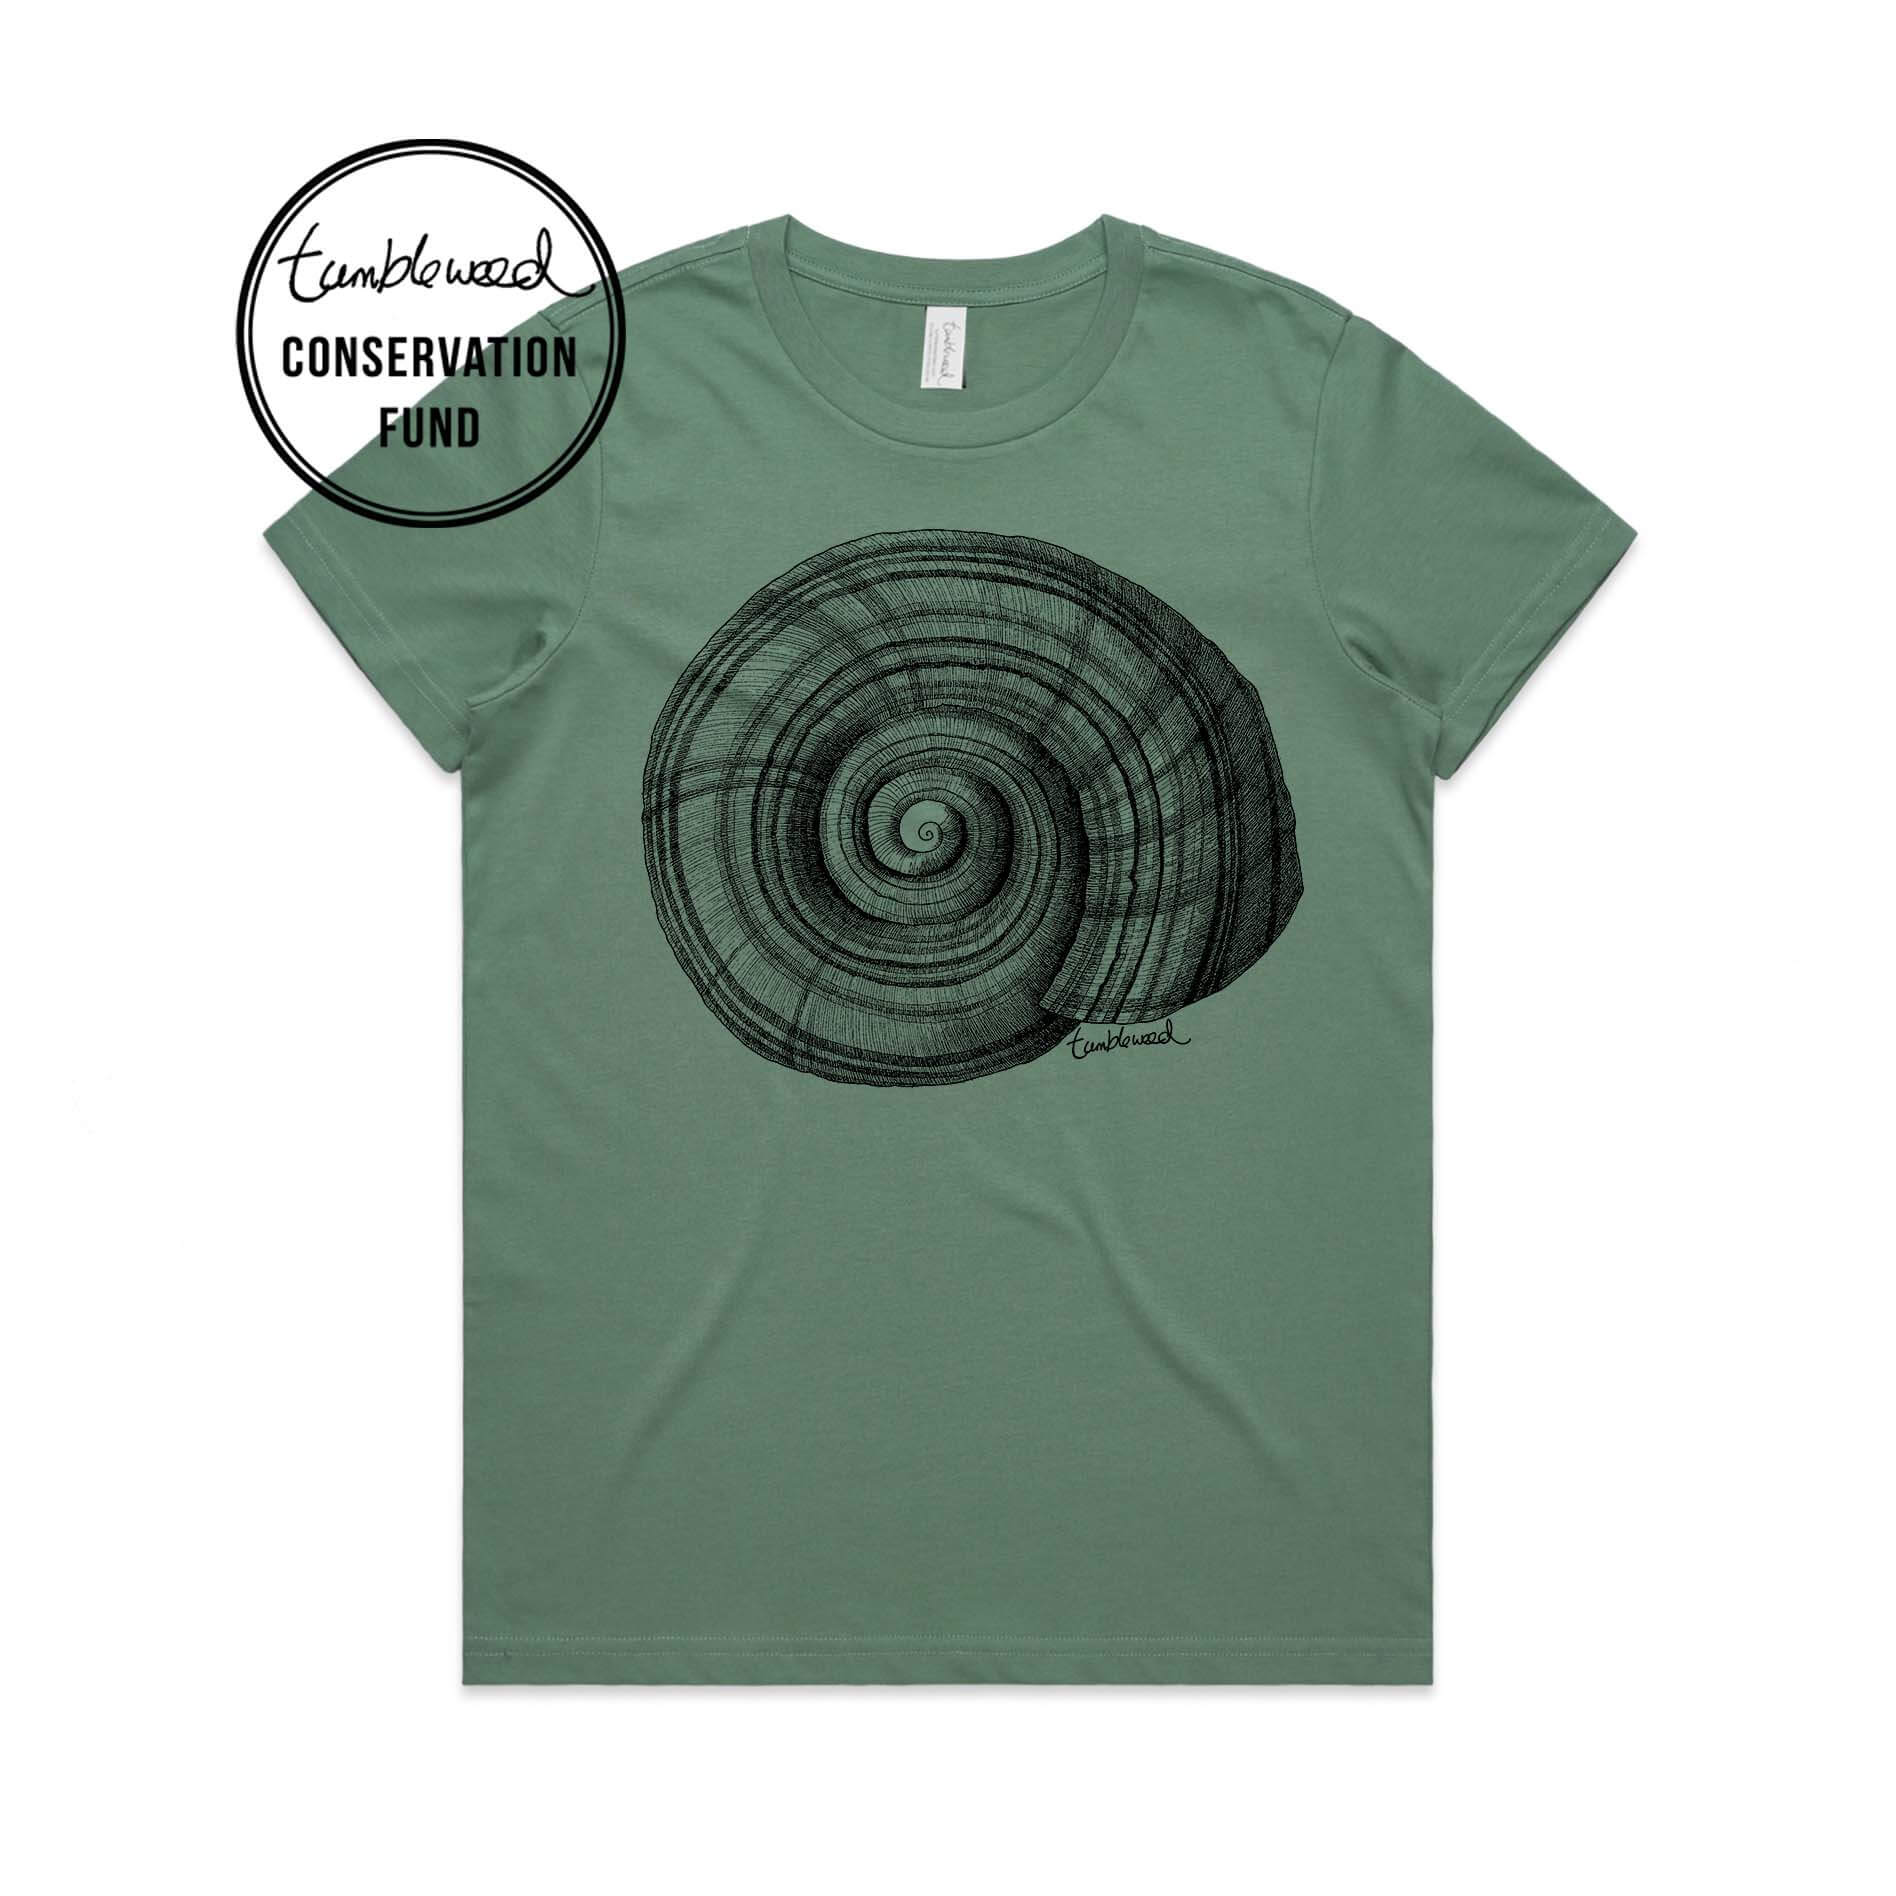 Sage, female t-shirt featuring a screen printed NZ Snail design.